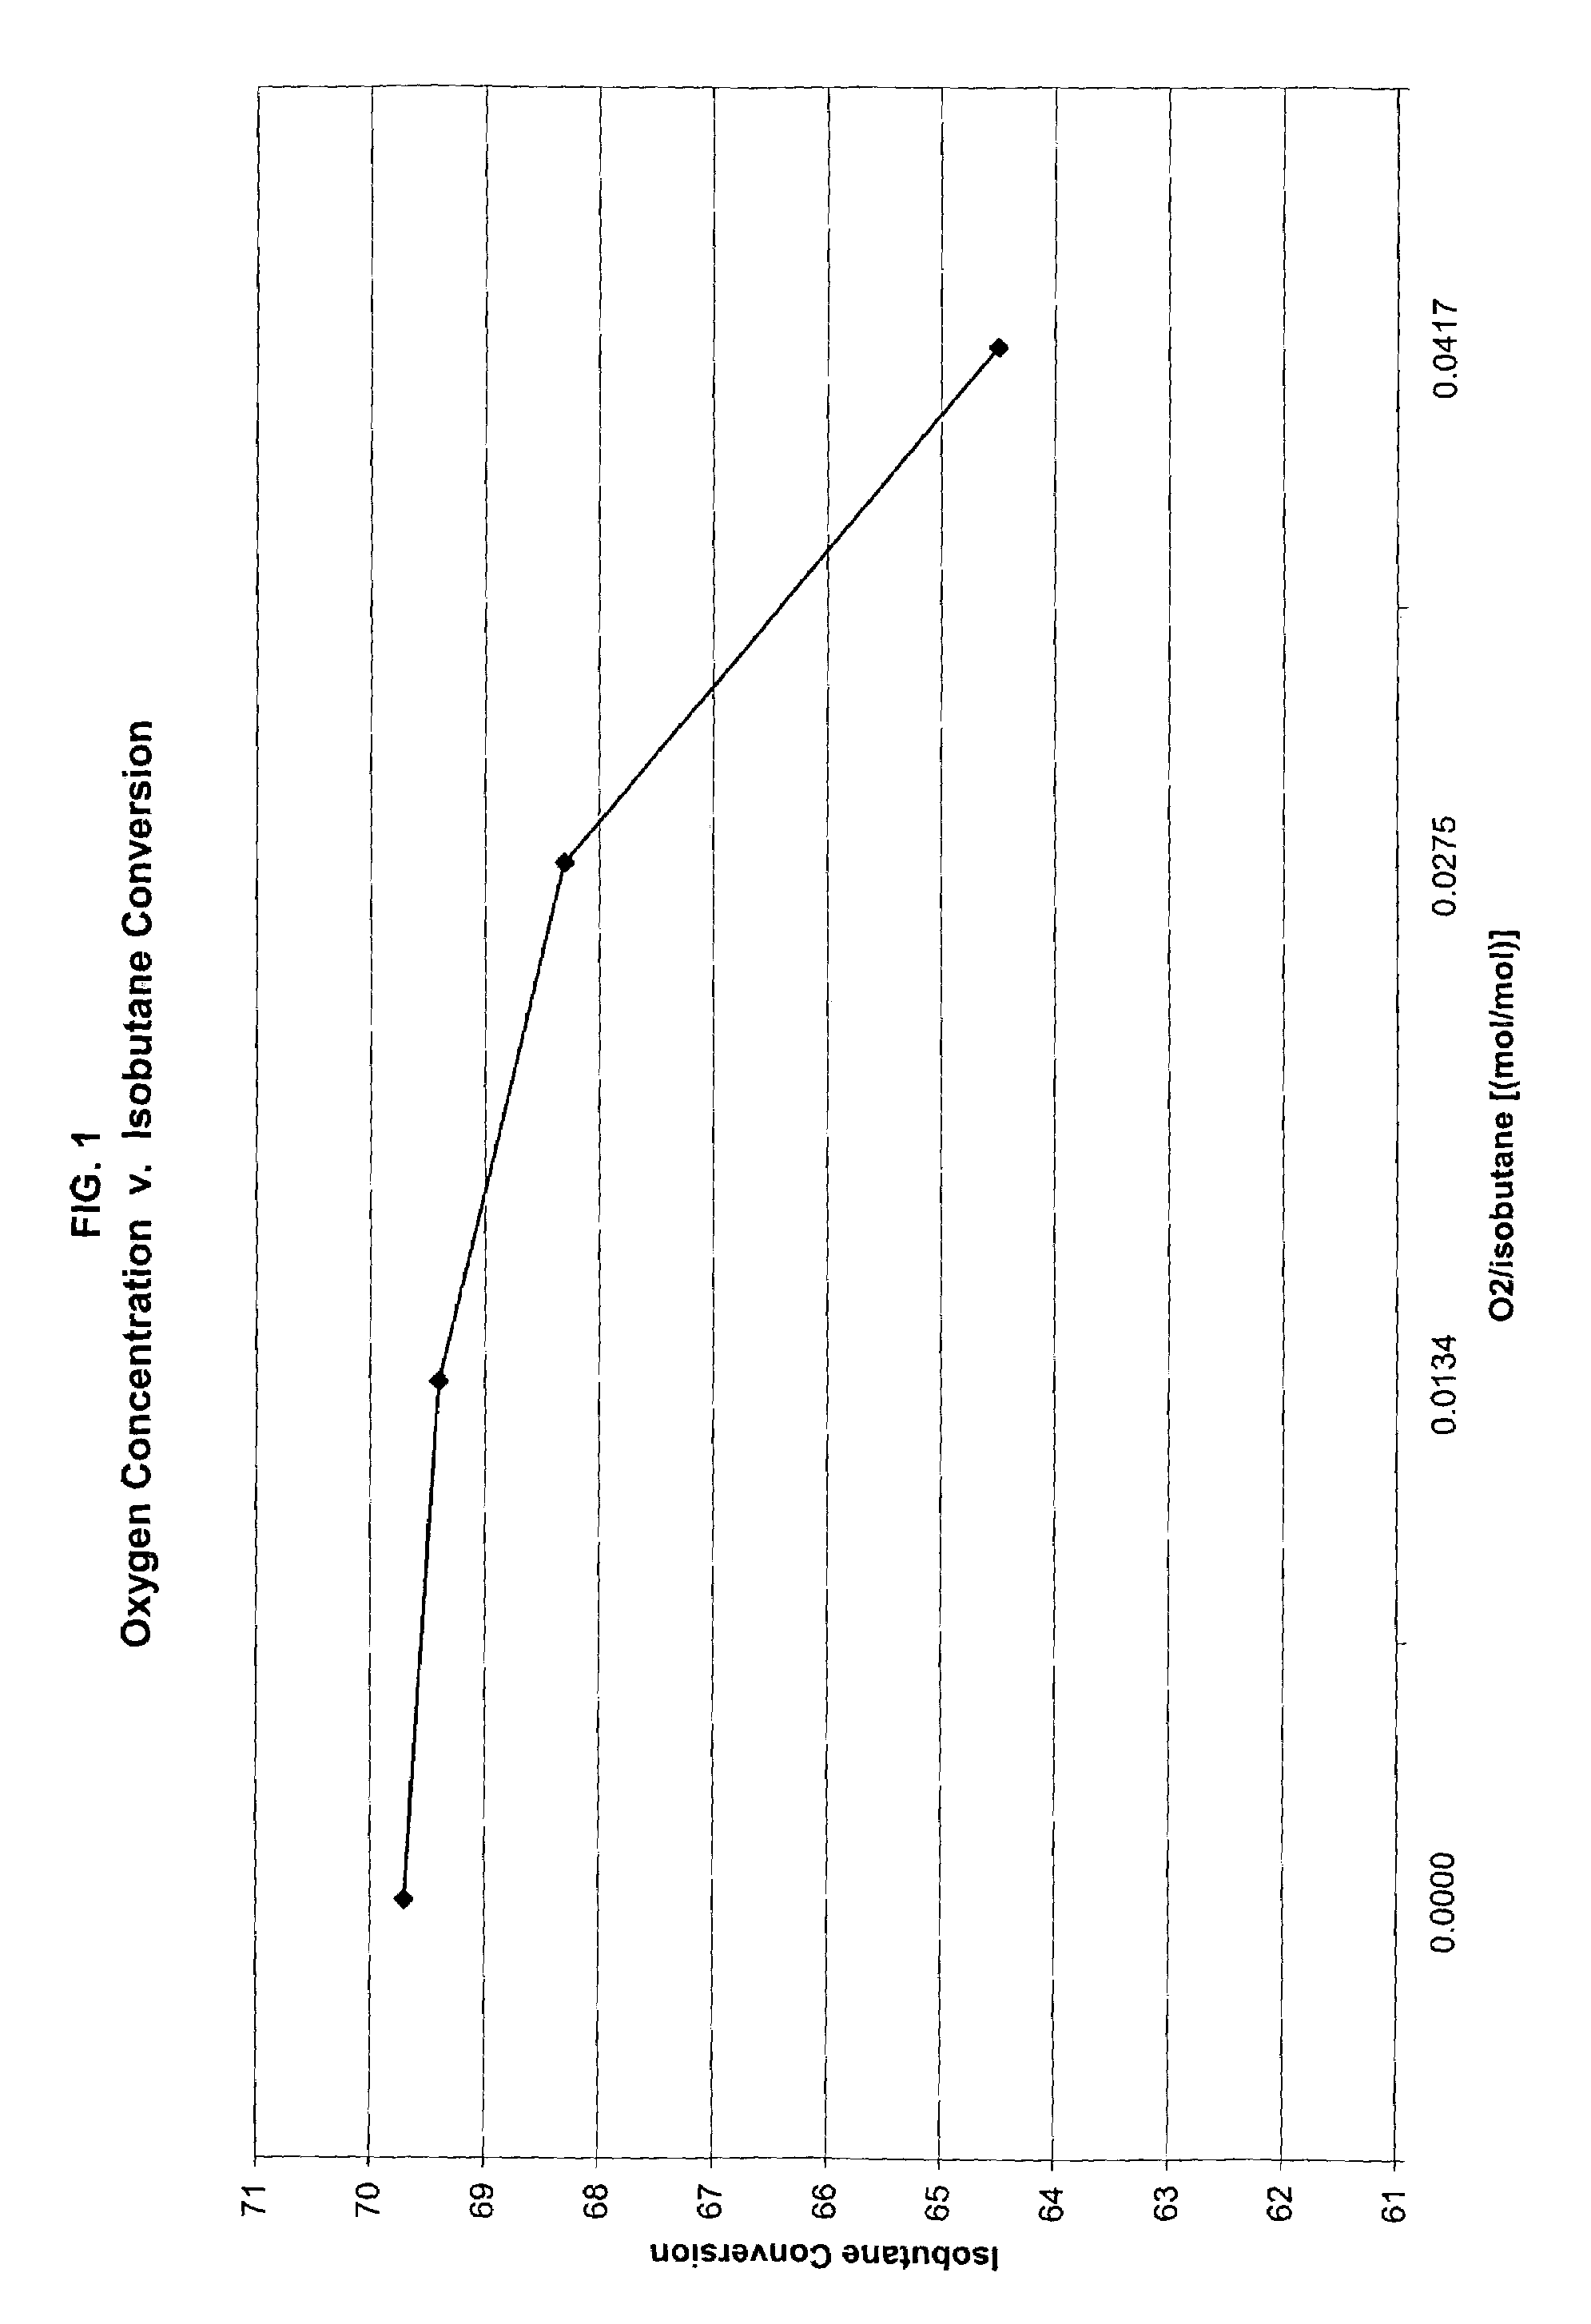 Dehydrogenation process for olefins